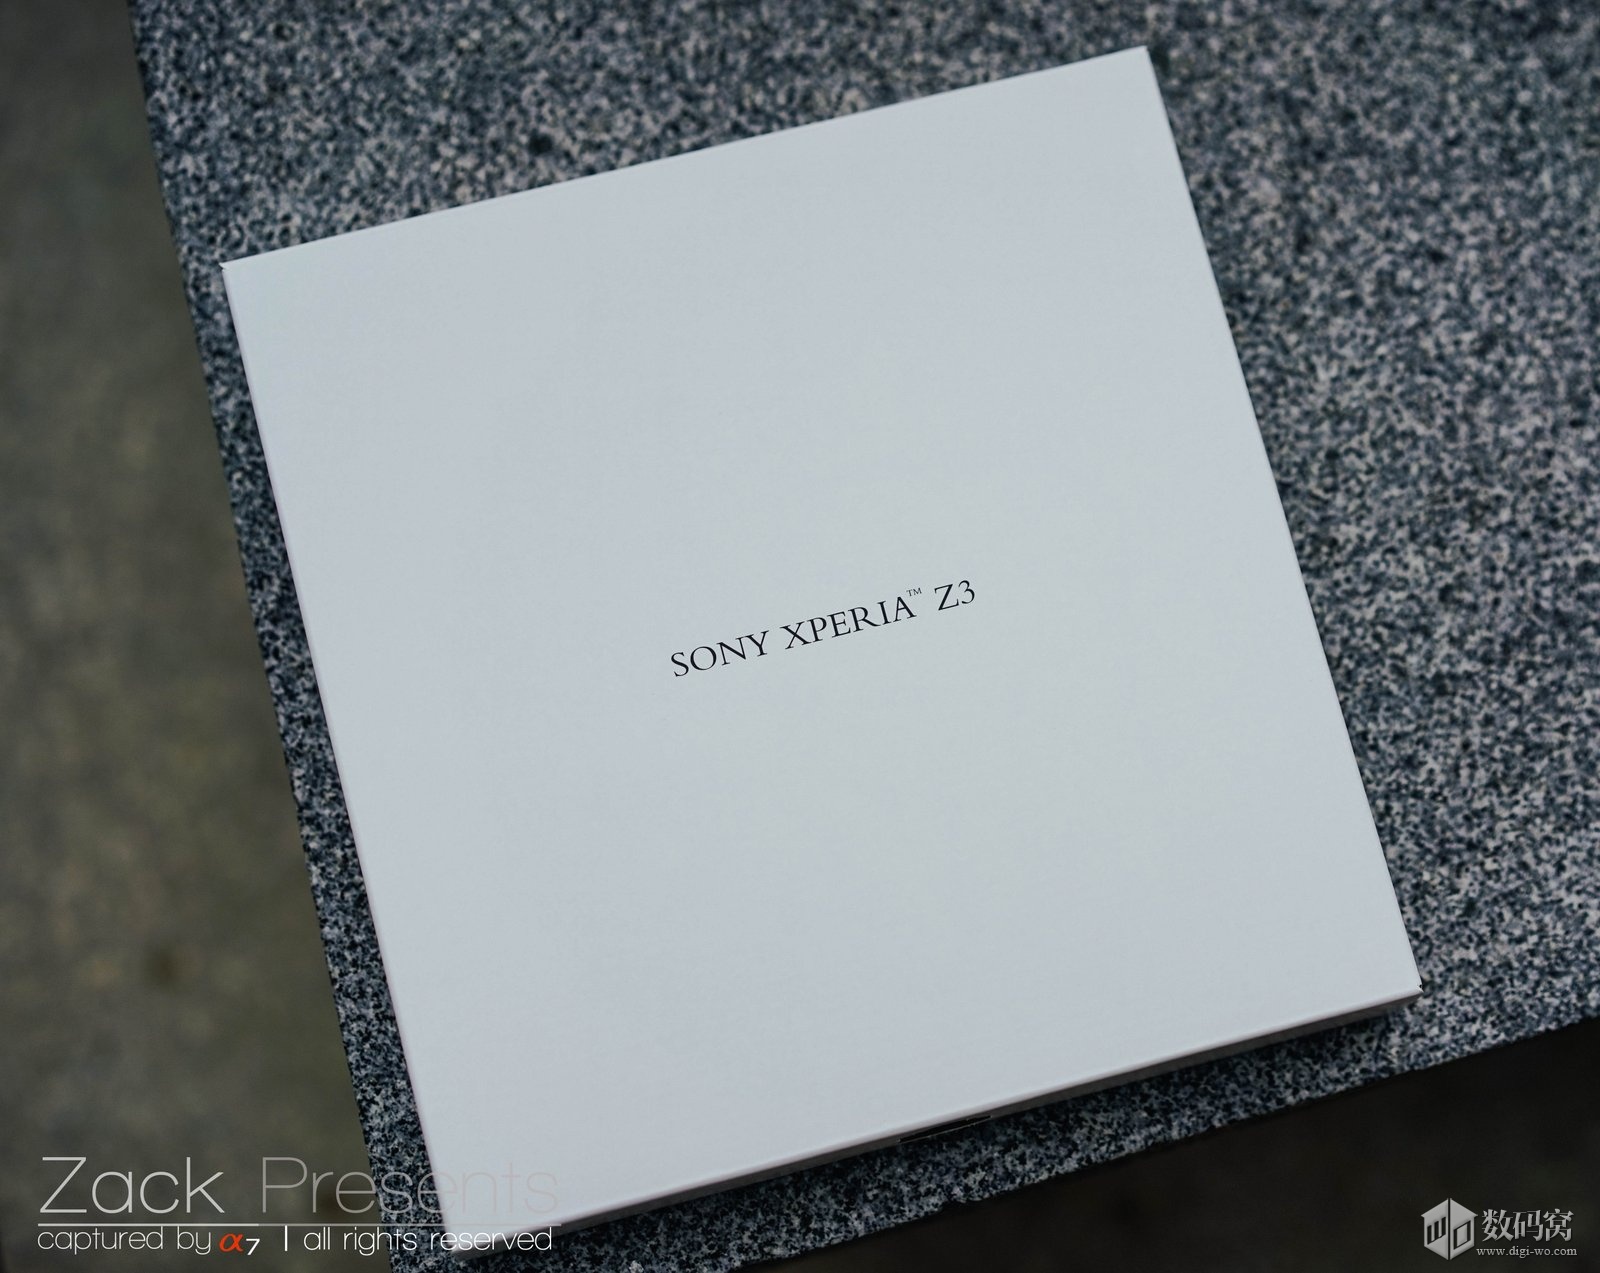 White Xperia Z3 box